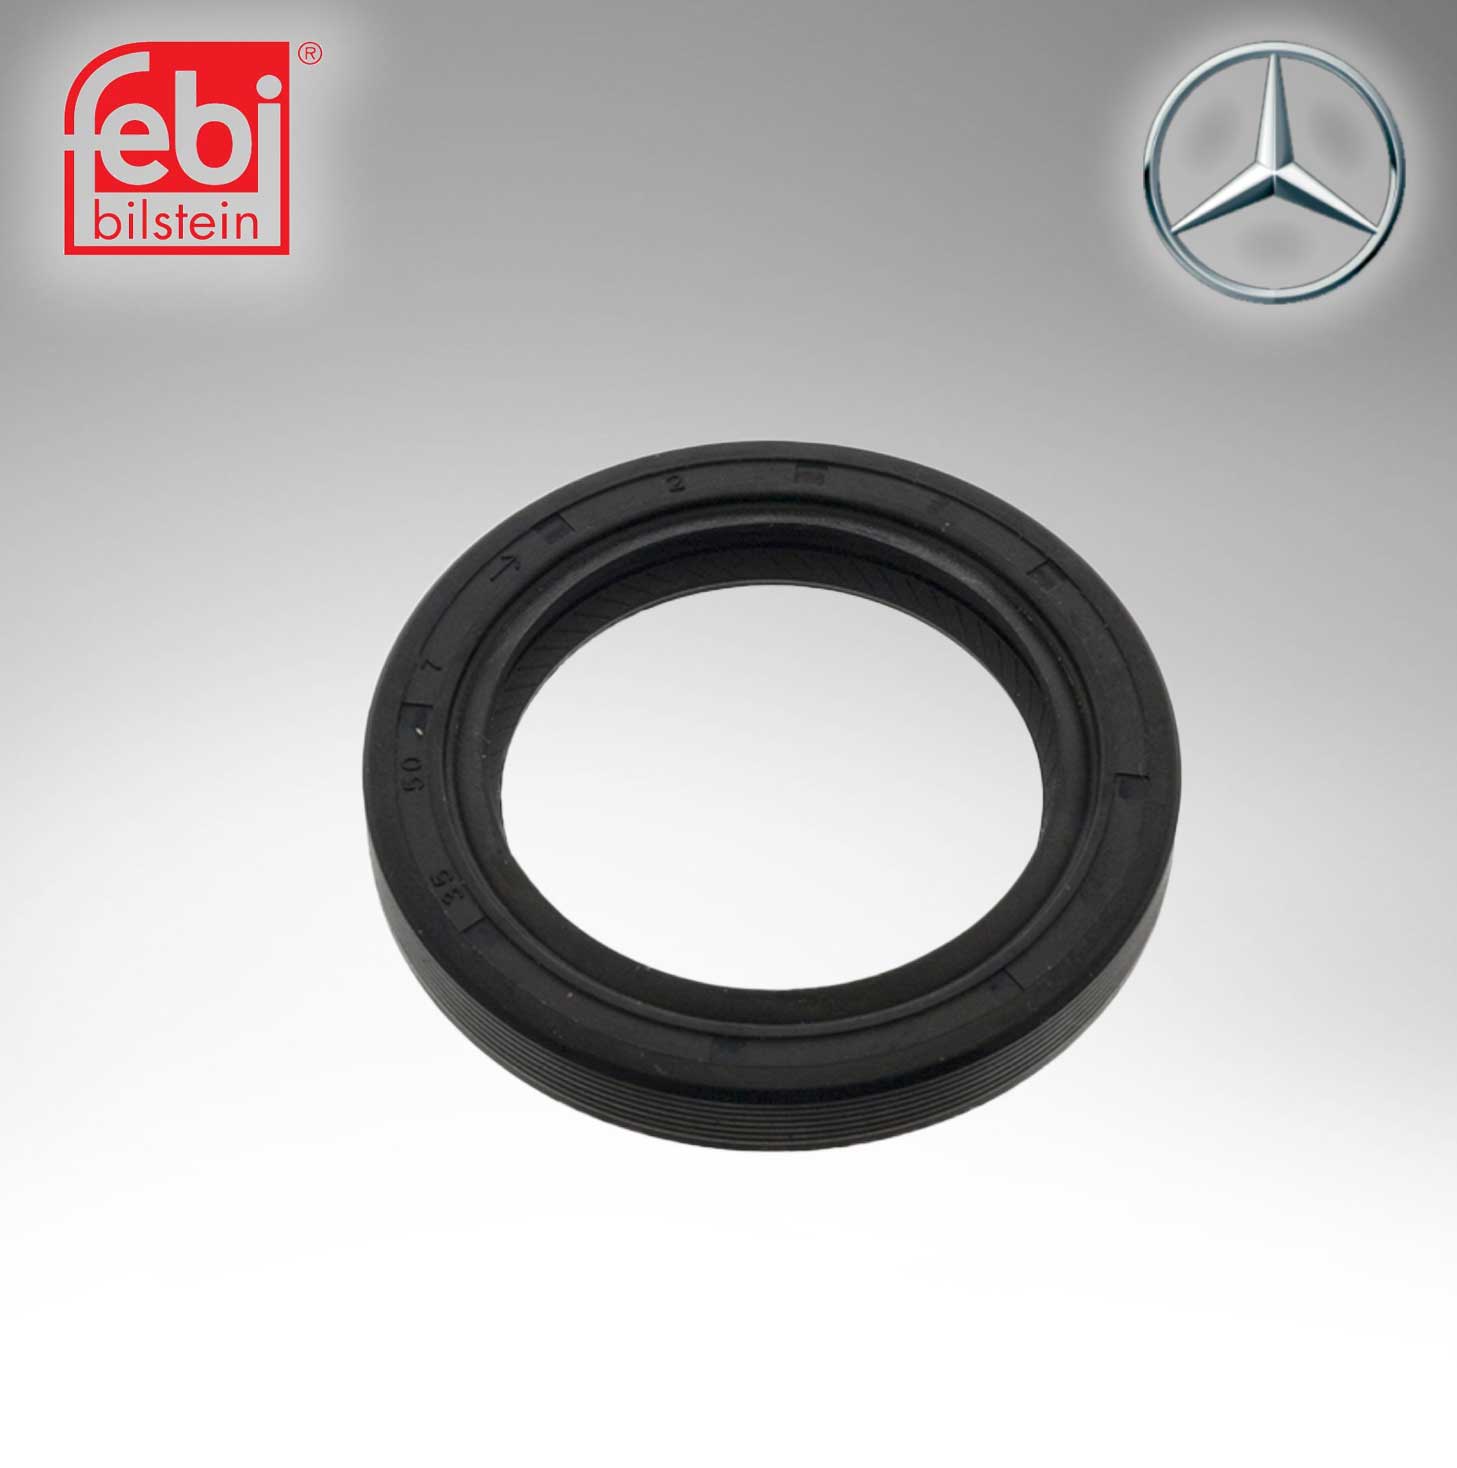 Febi Manual Transmission Shaft Seal SEAL (Febi # 4547) For Mercedes Benz 0109974347